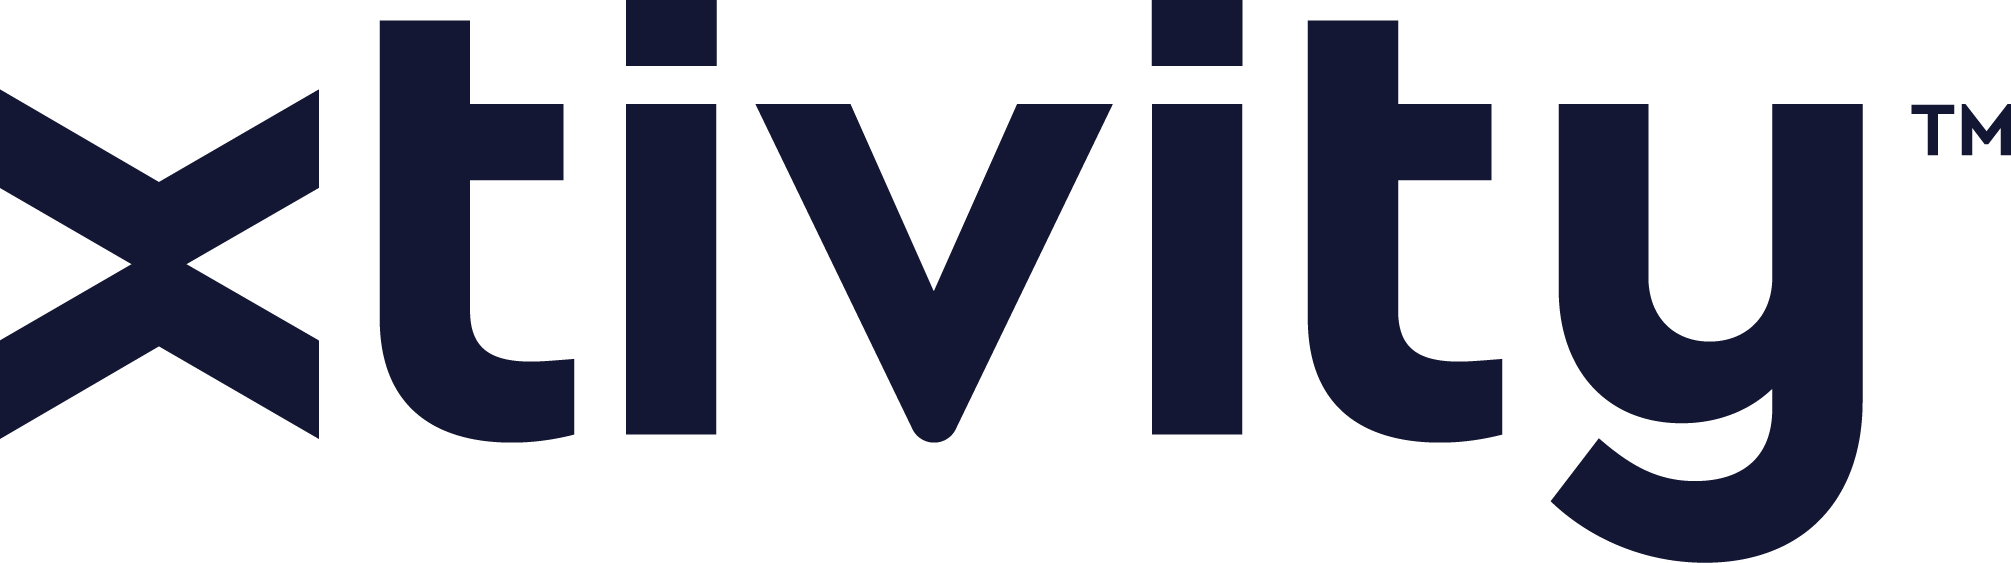 Xtivity Logo Blue TM